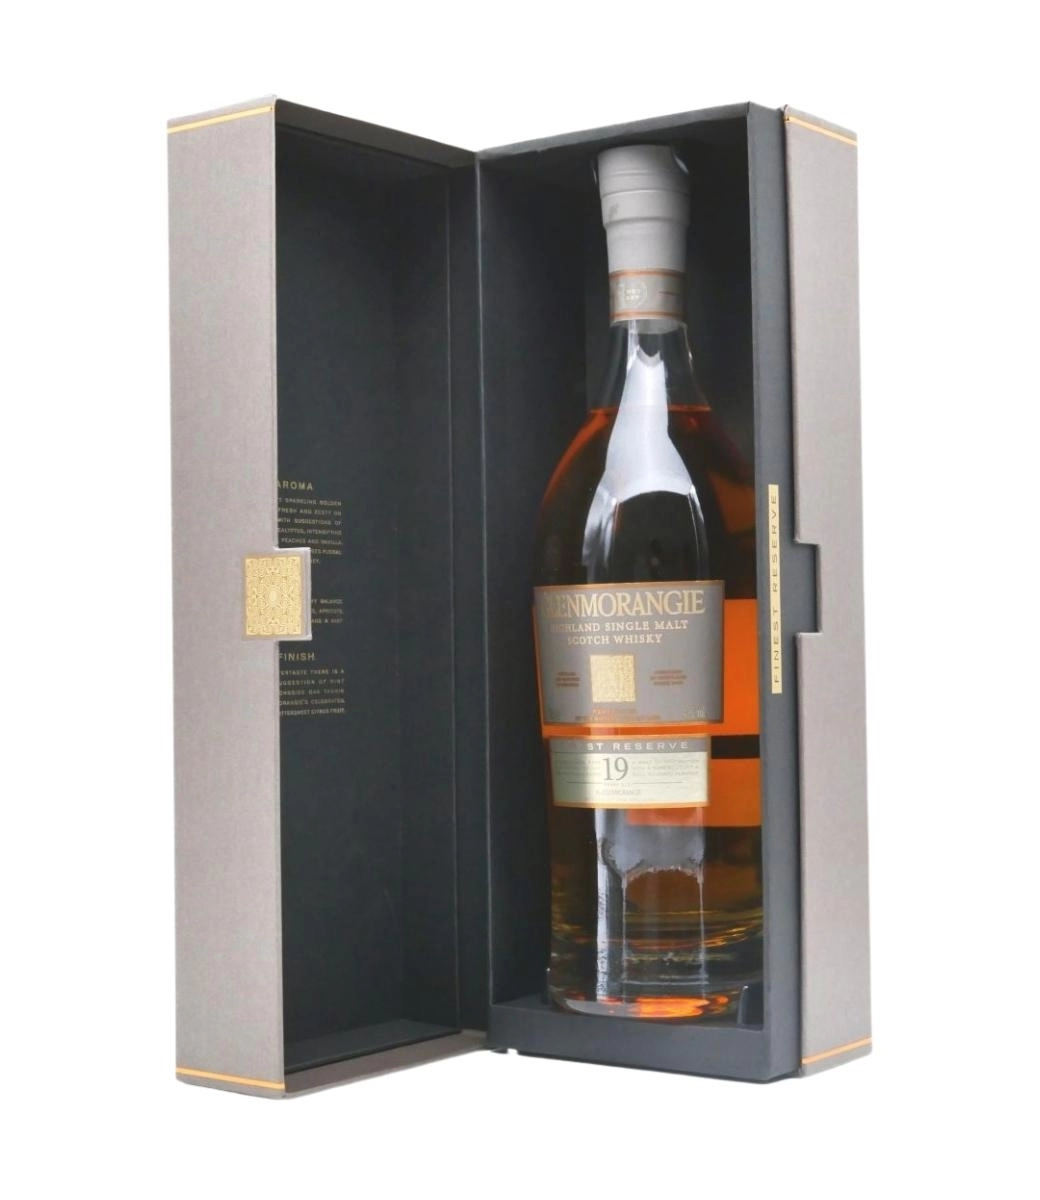 Whisky Glenmorangie 19 Ani 0.7l